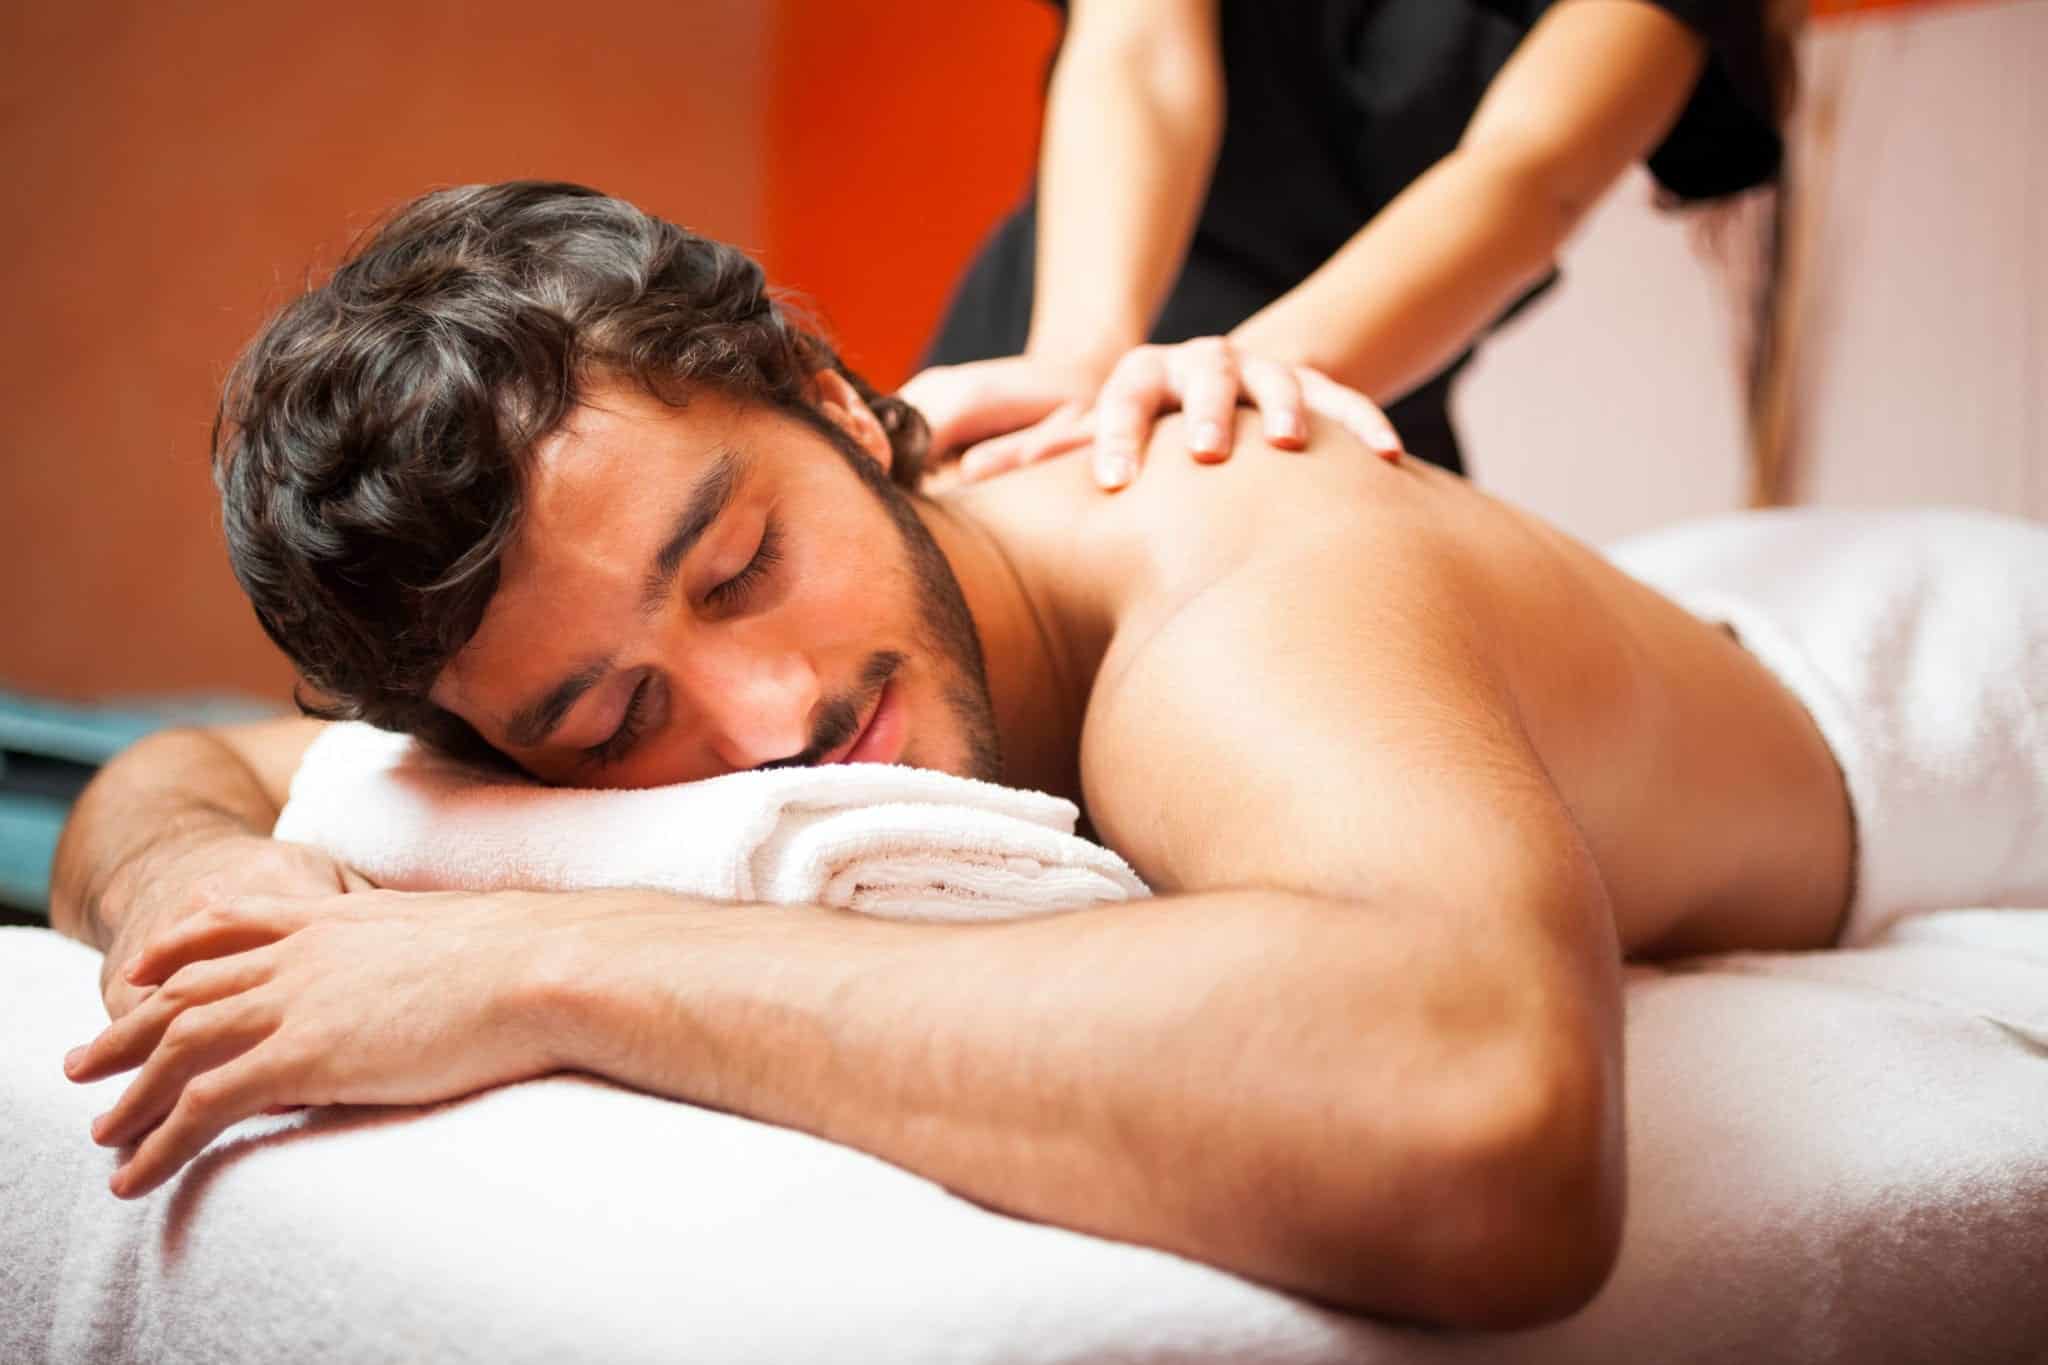 ankush rastogi recommends Massage Parlour In Houston